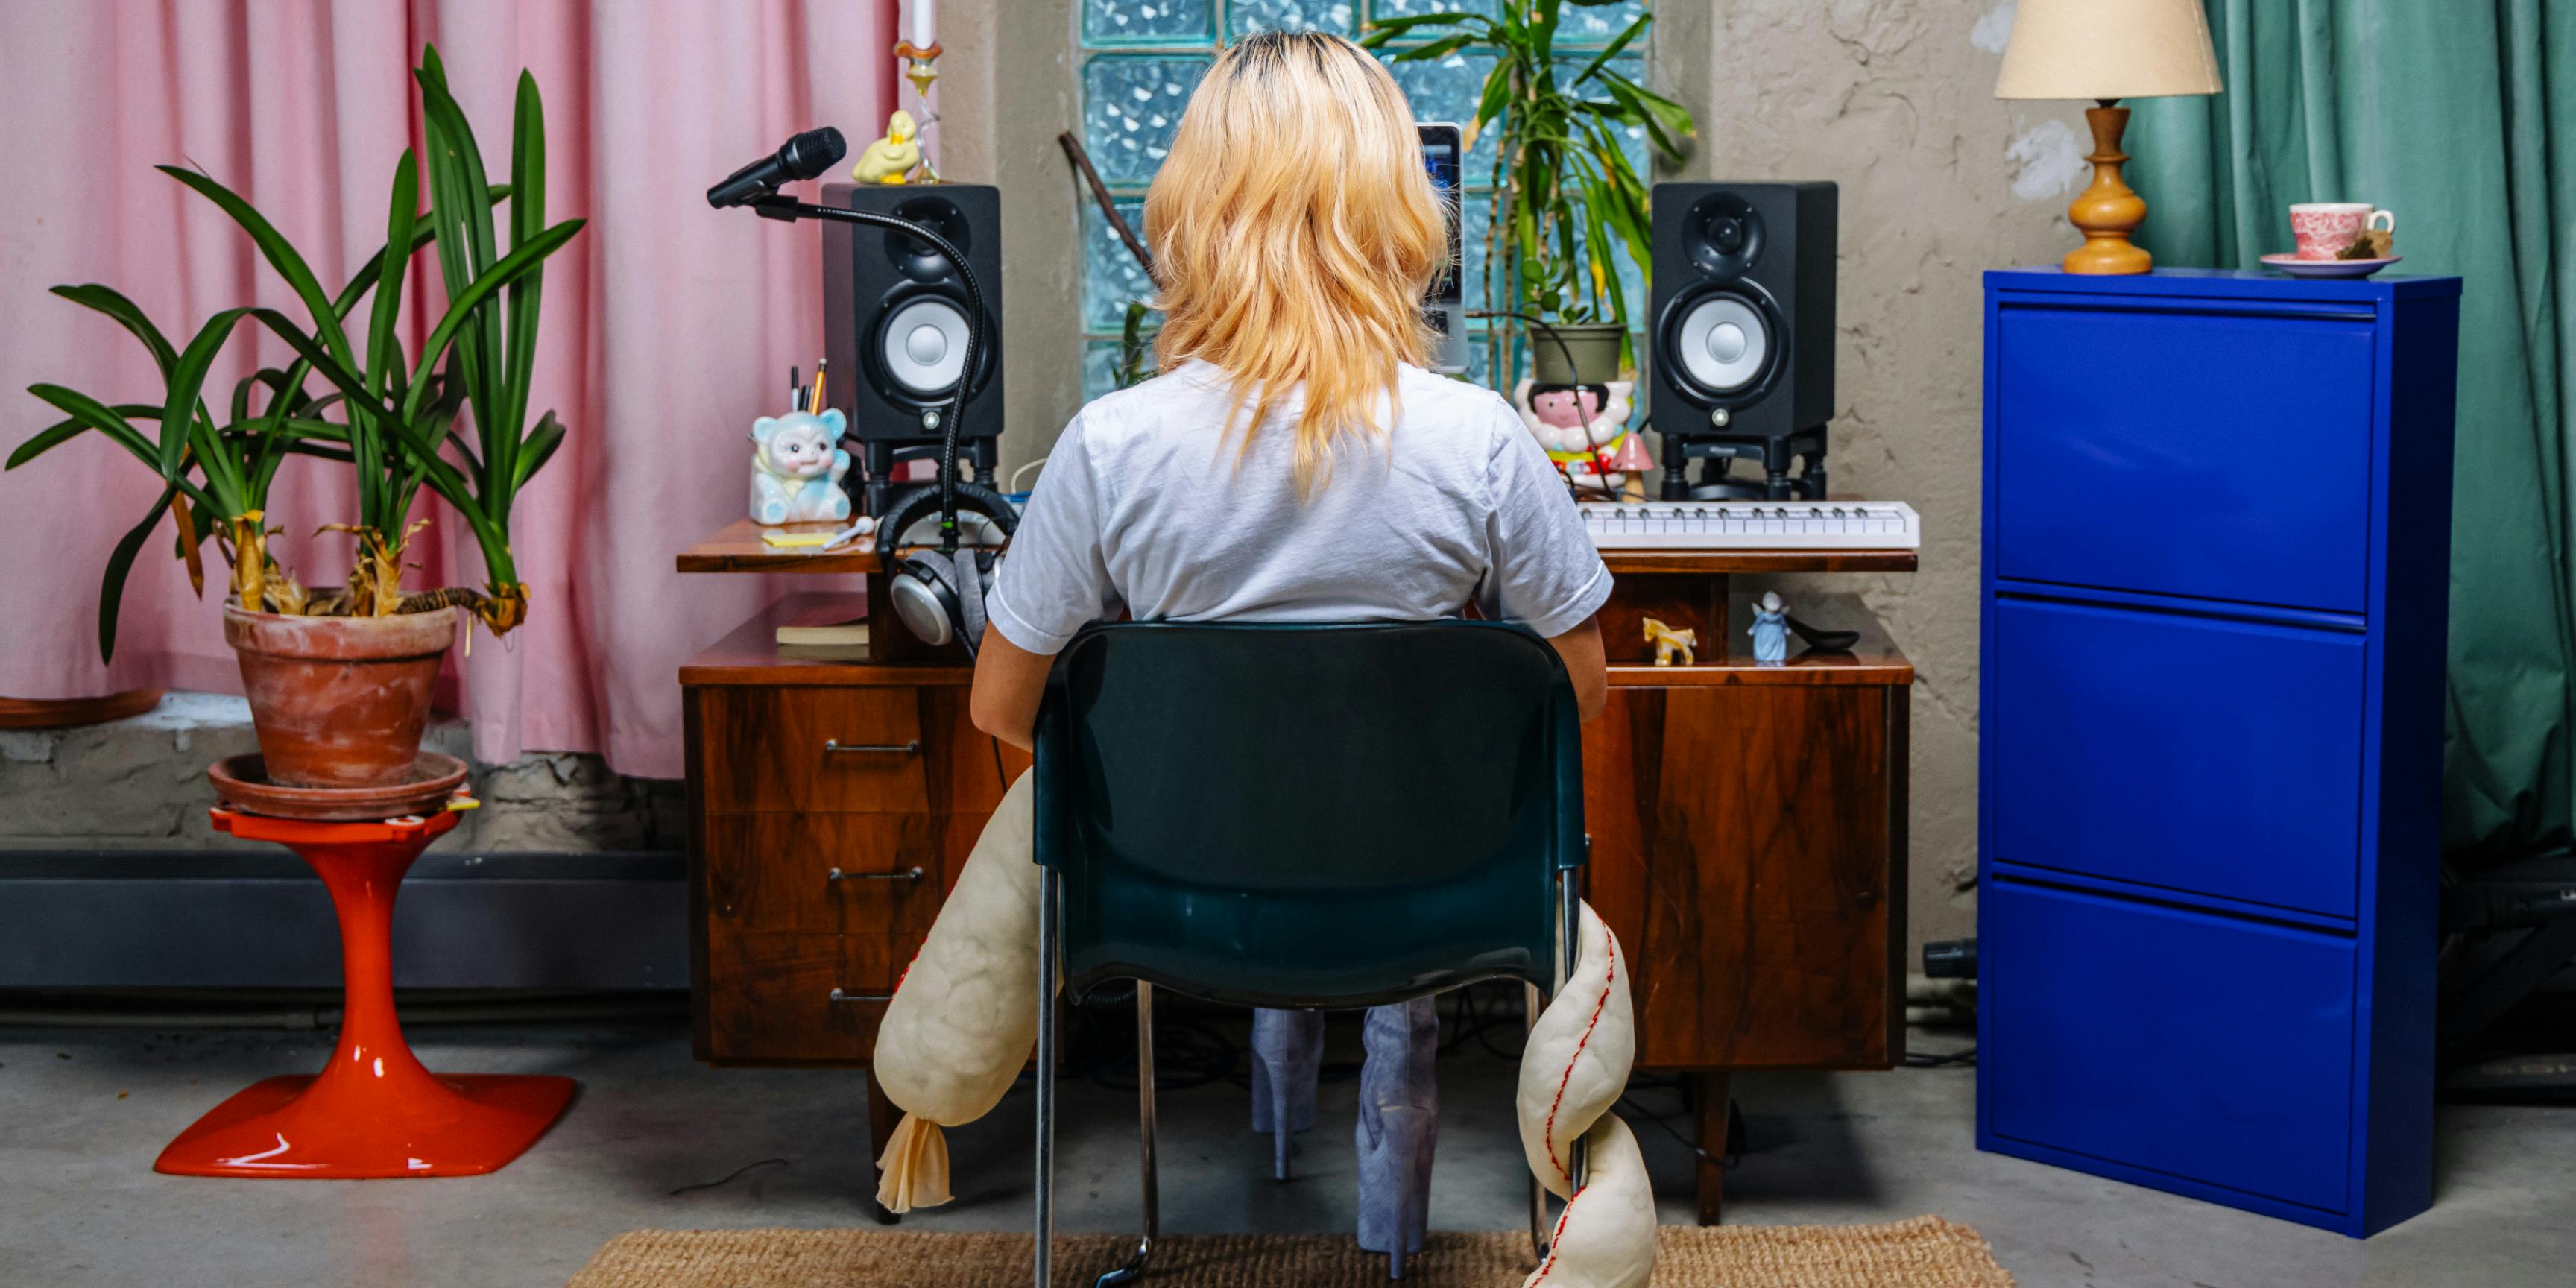 Blond woman studio monitors